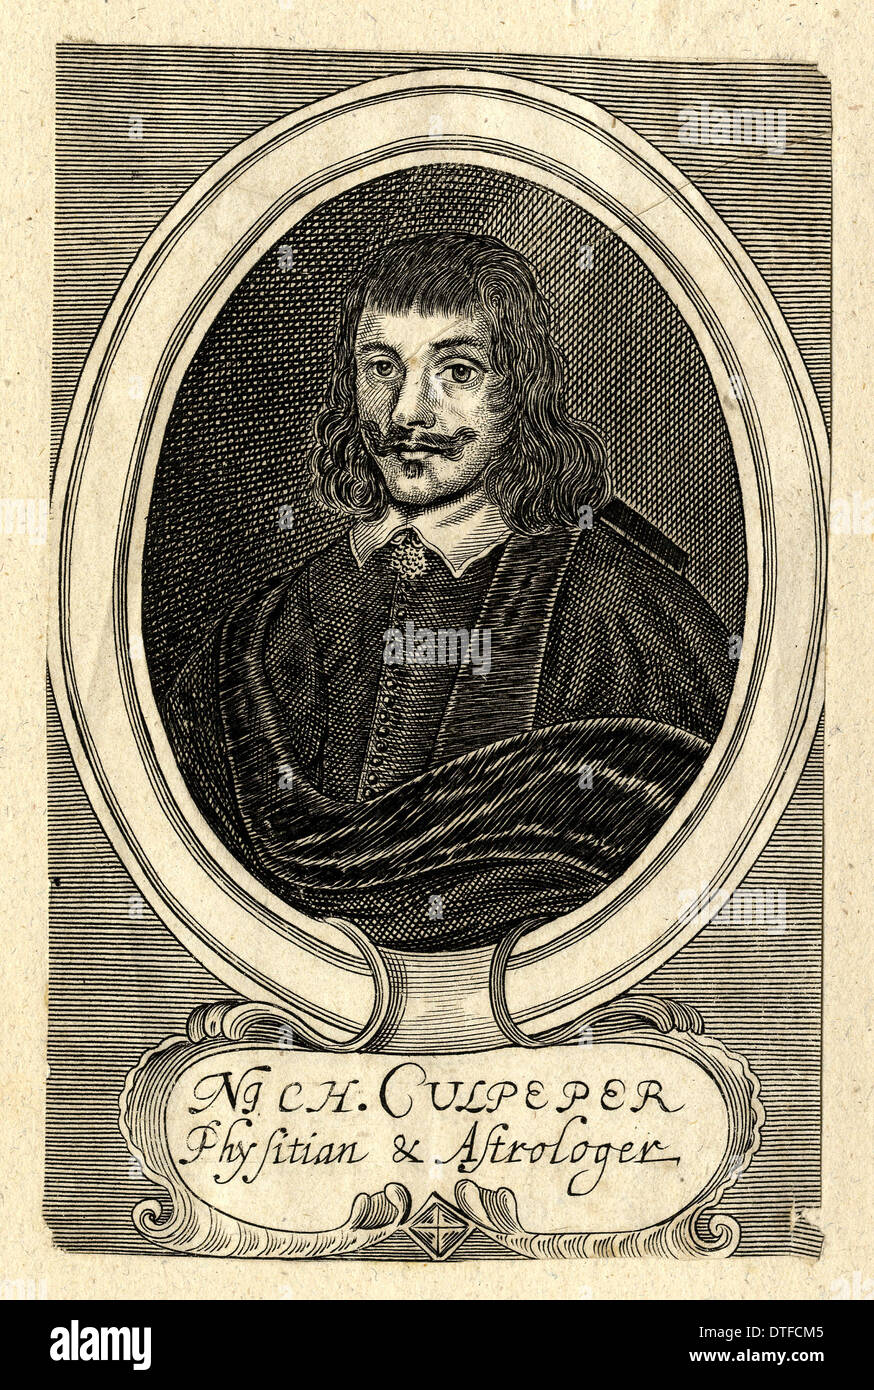 Nicholas Culpeper (1616-1654) Stockfoto